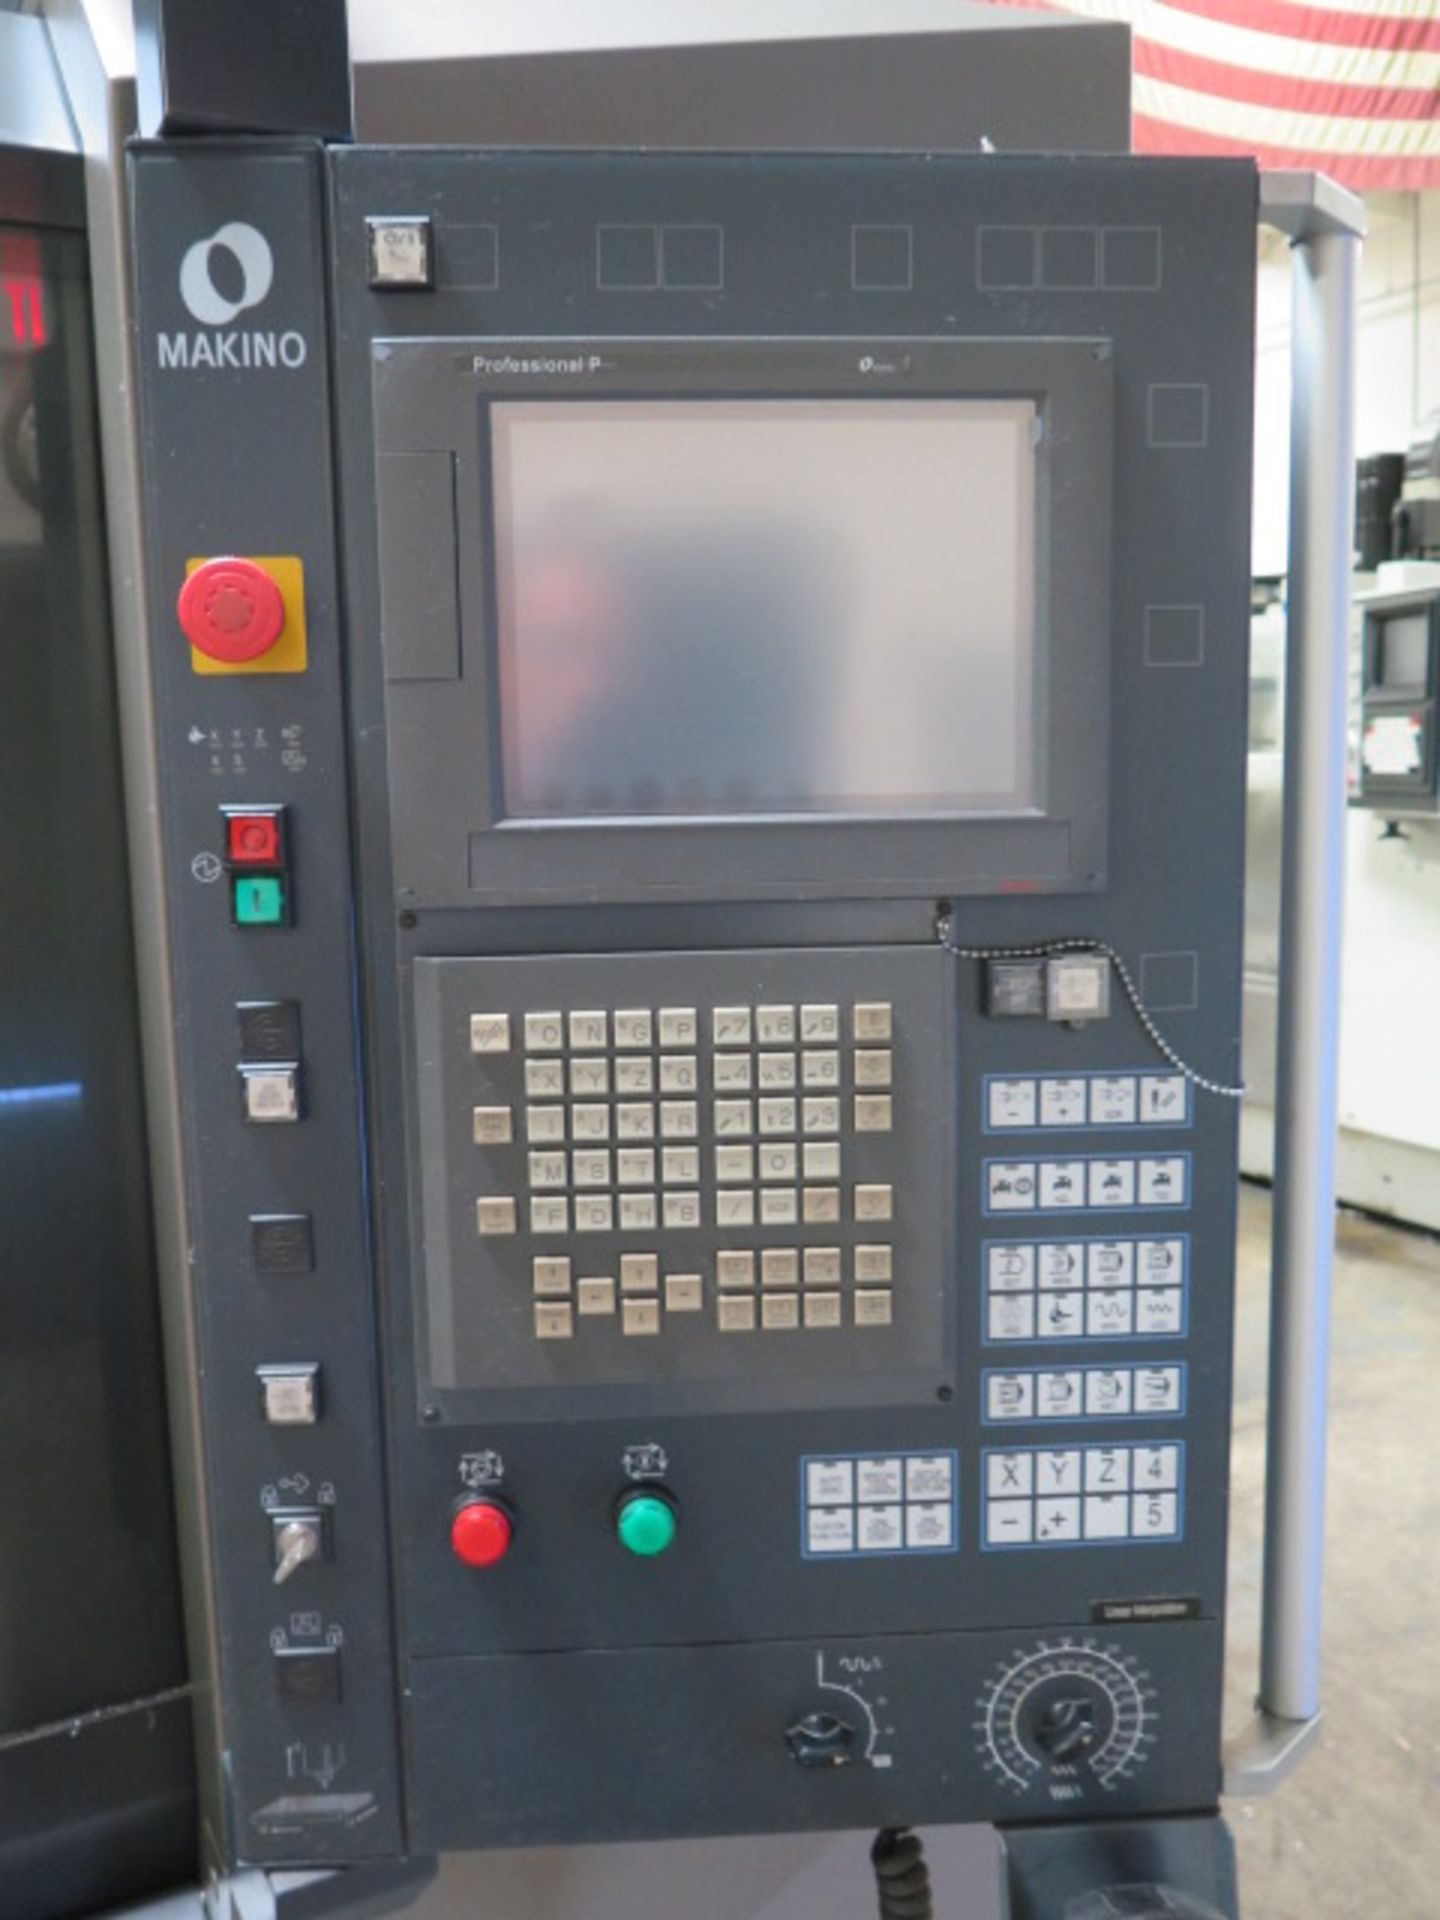 2012 Makino PS95 CNC Vertical Machining Center s/n U130541 w/ Makino Professional 3 Controls, 30- - Image 9 of 16